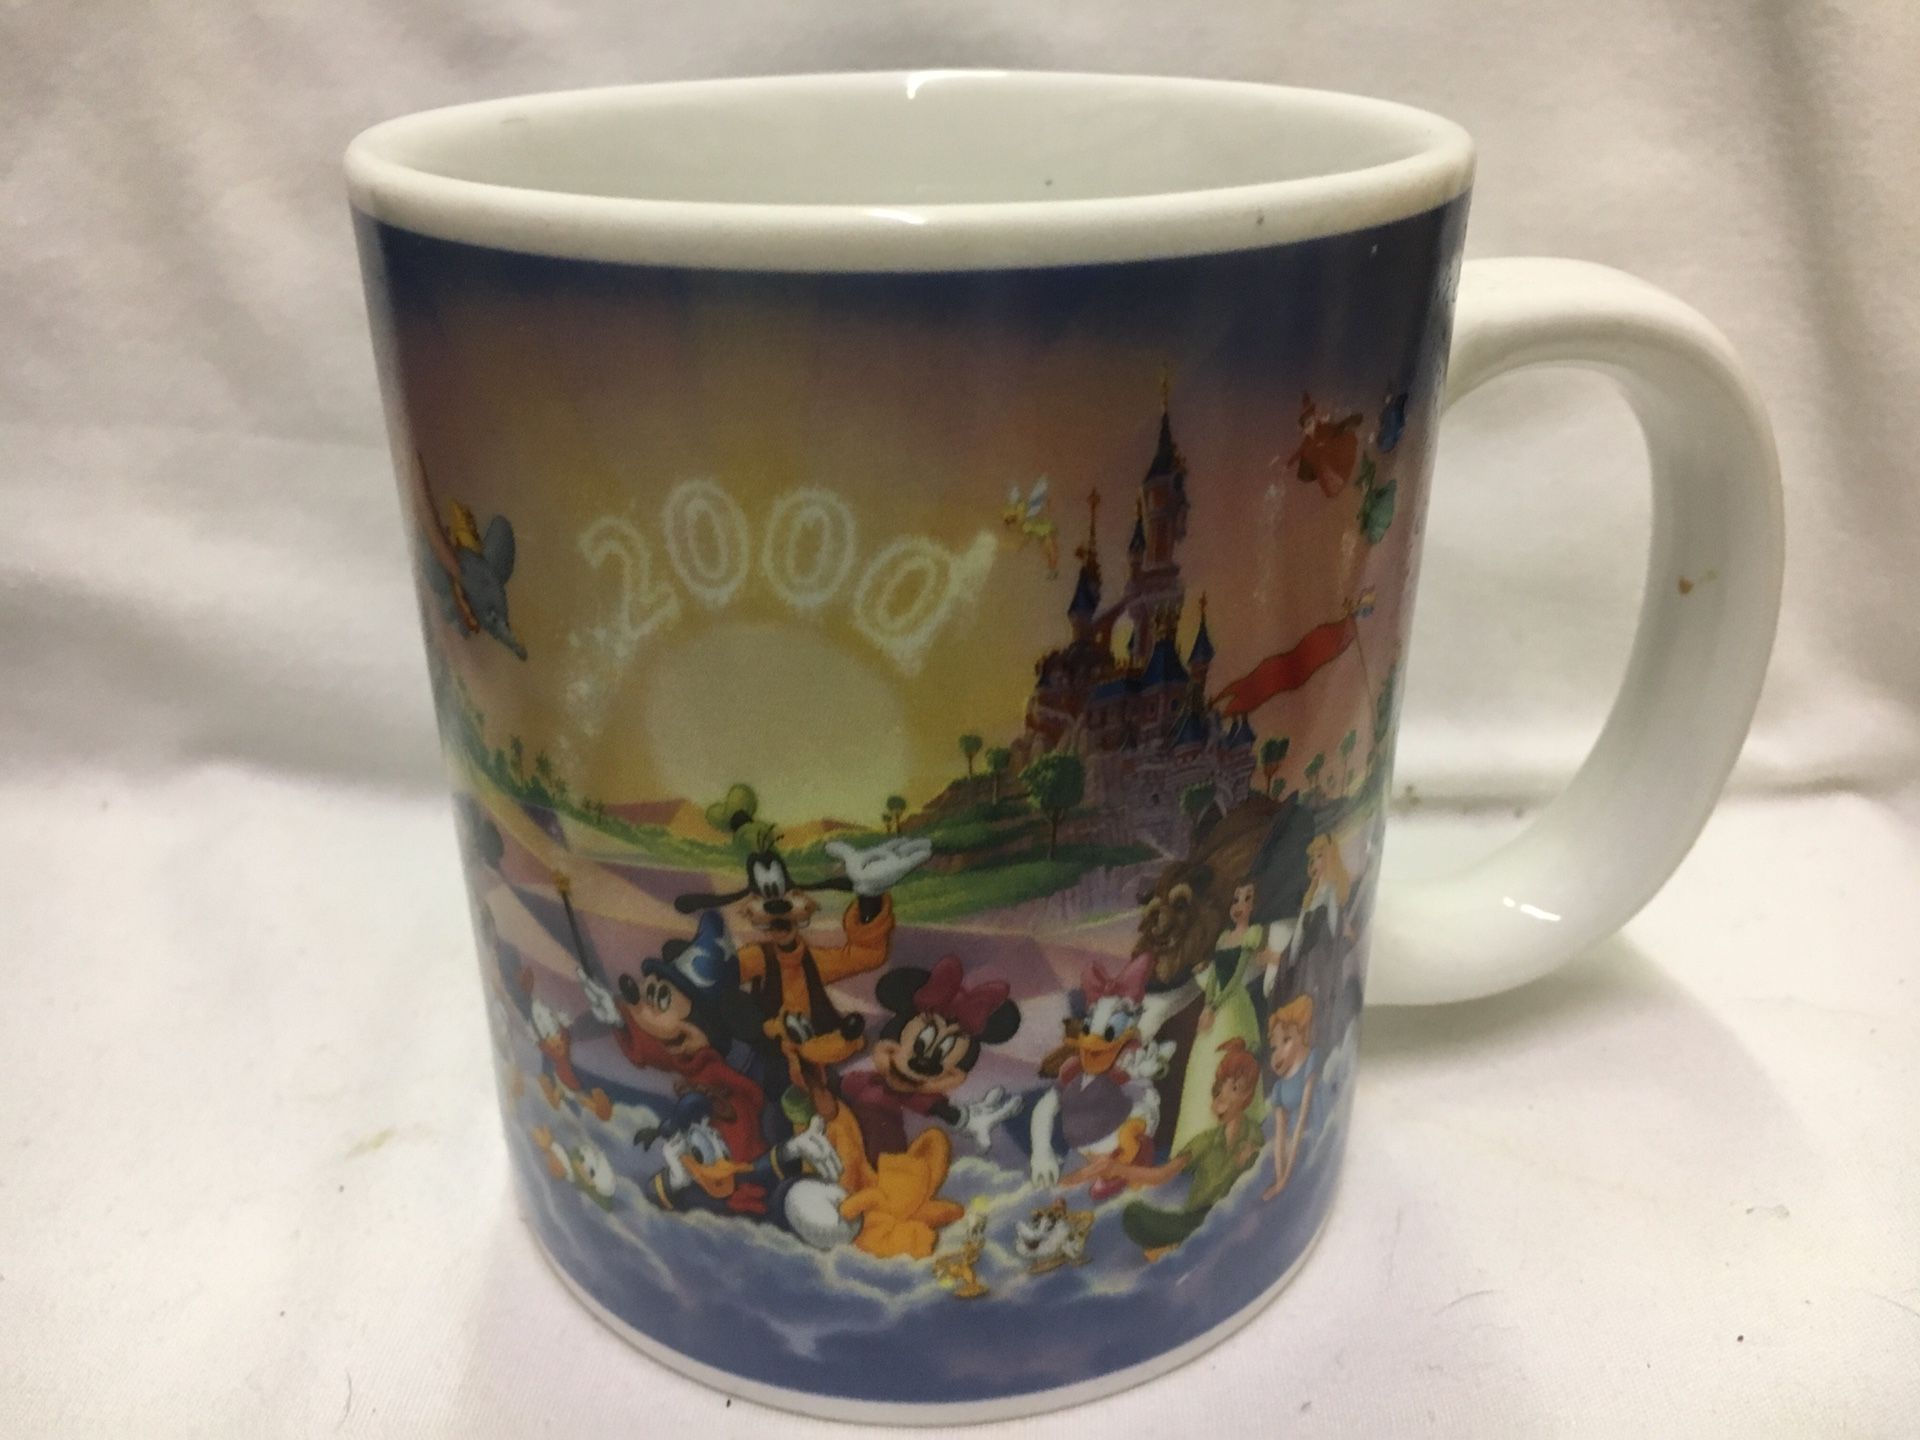 Giant Disney Coffee Mug